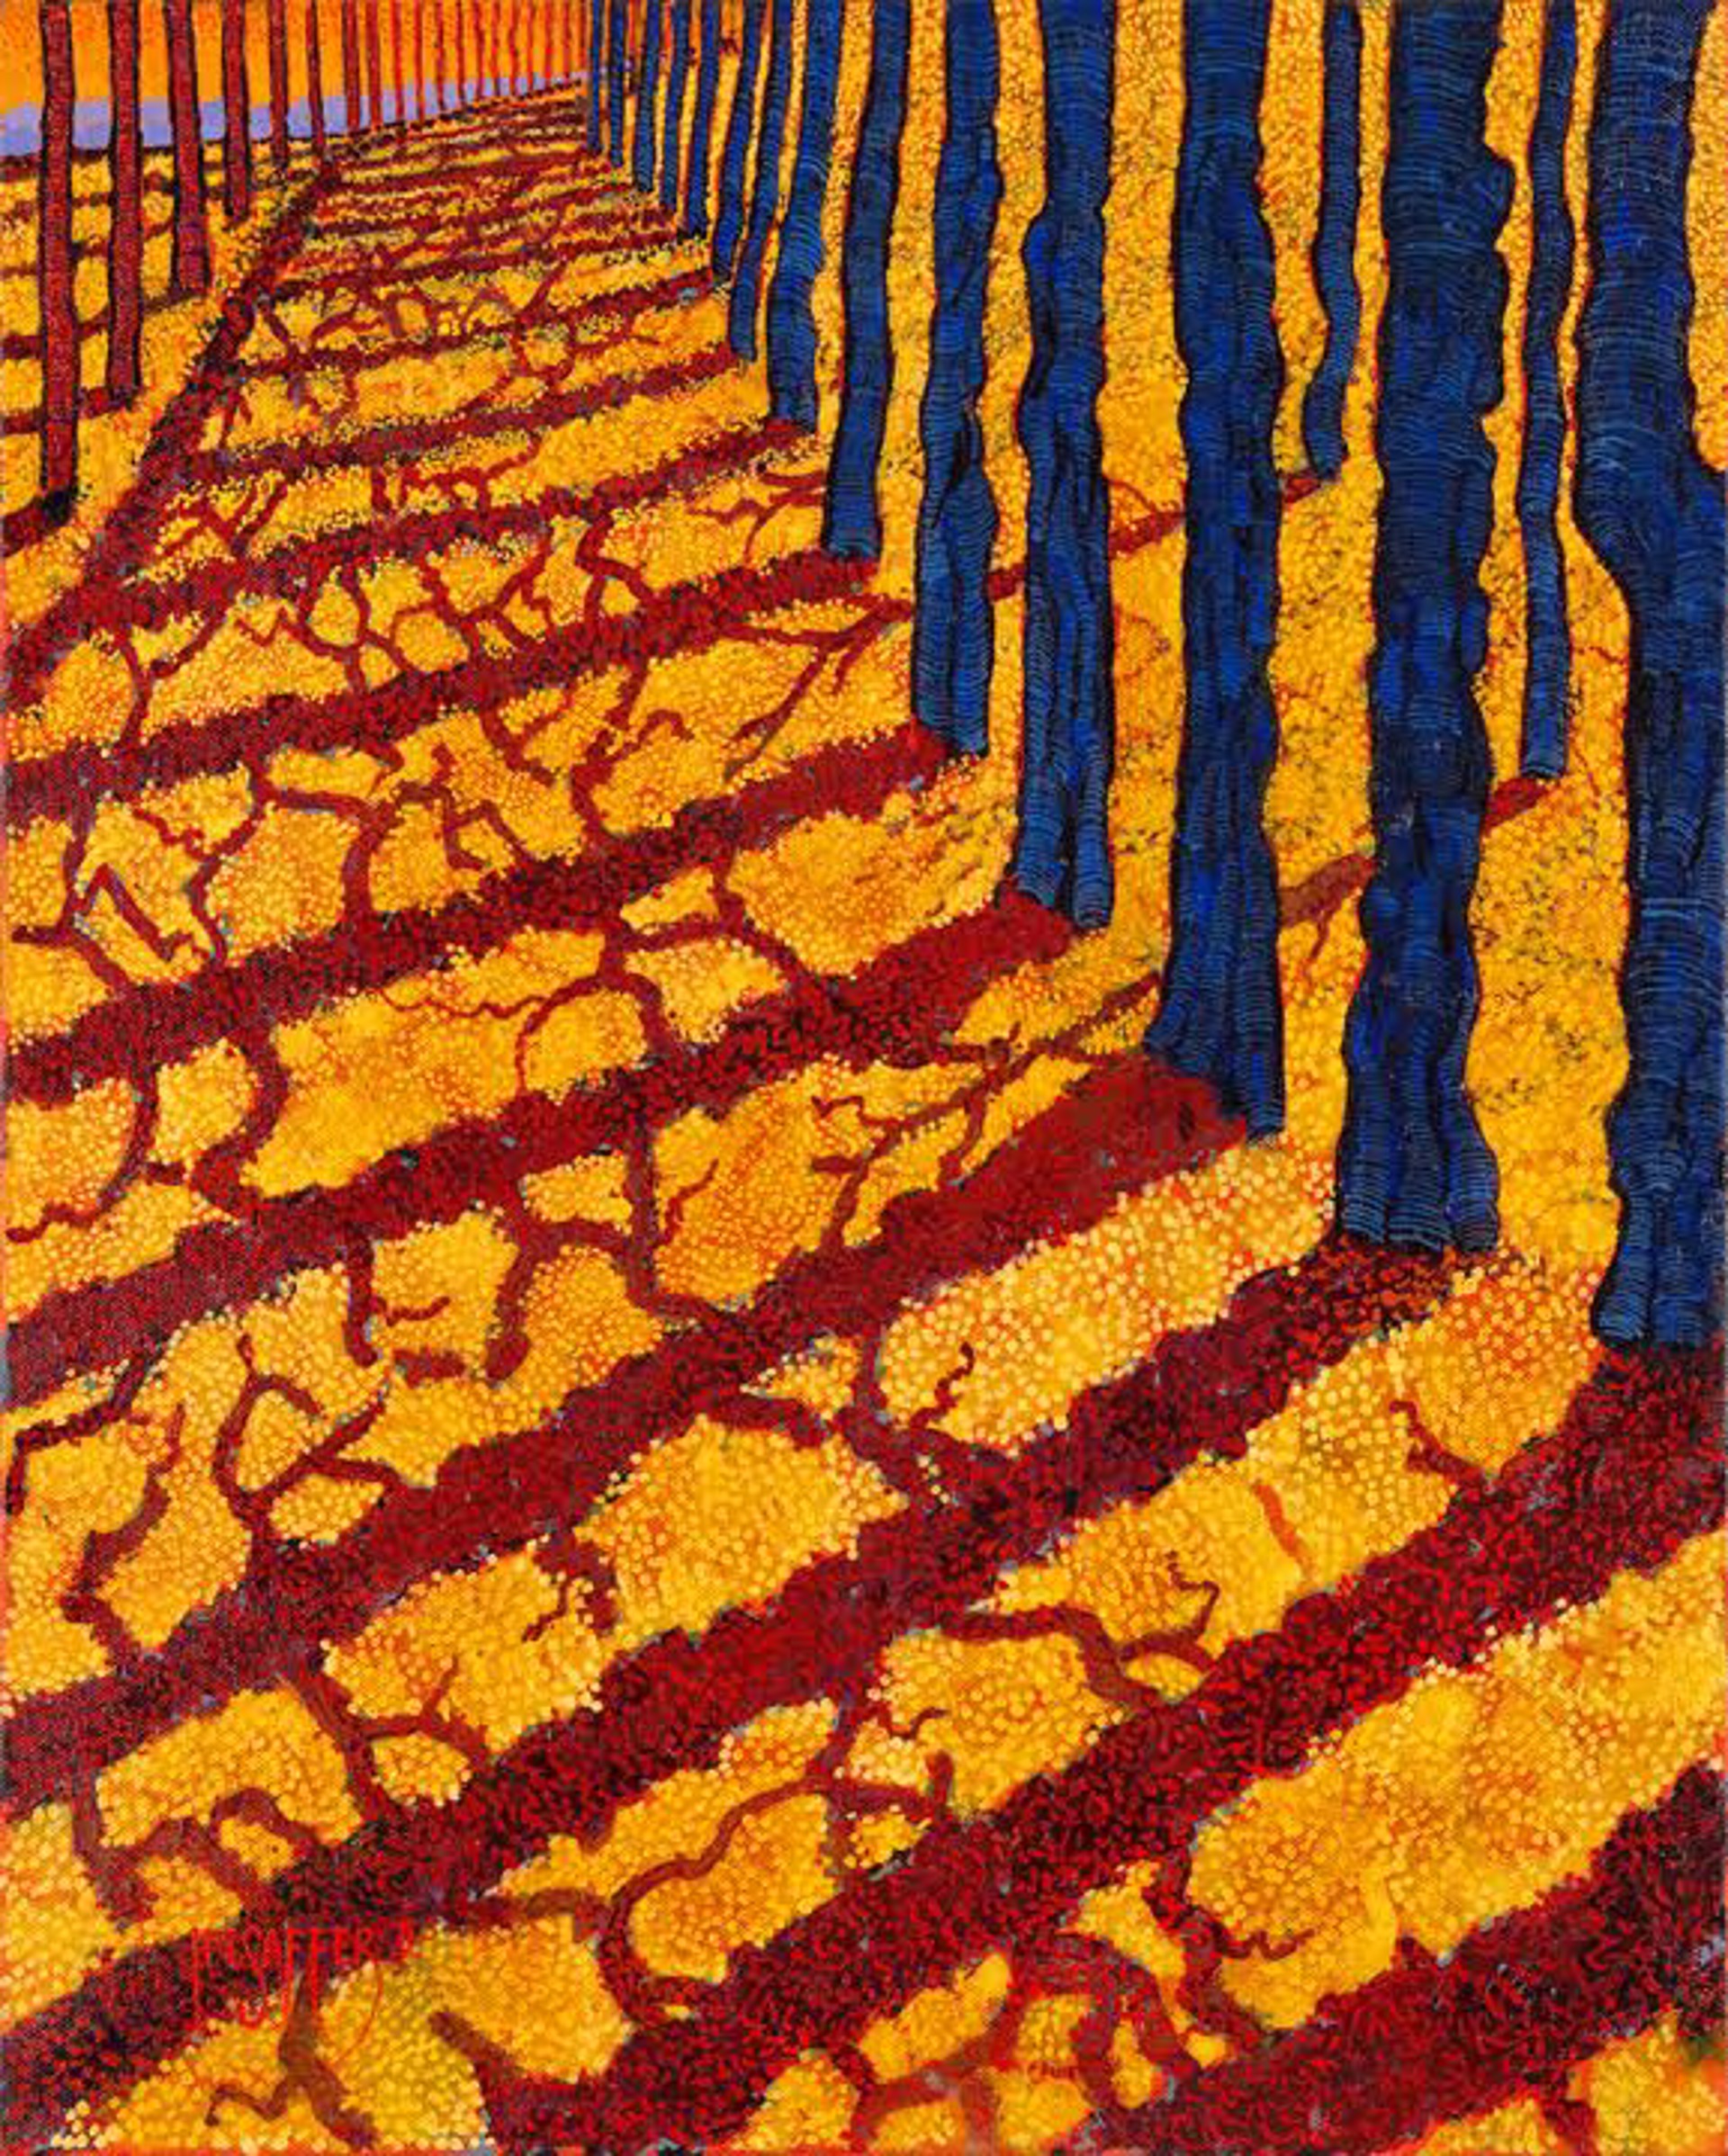 Orange Shadow by H. M. Saffer II